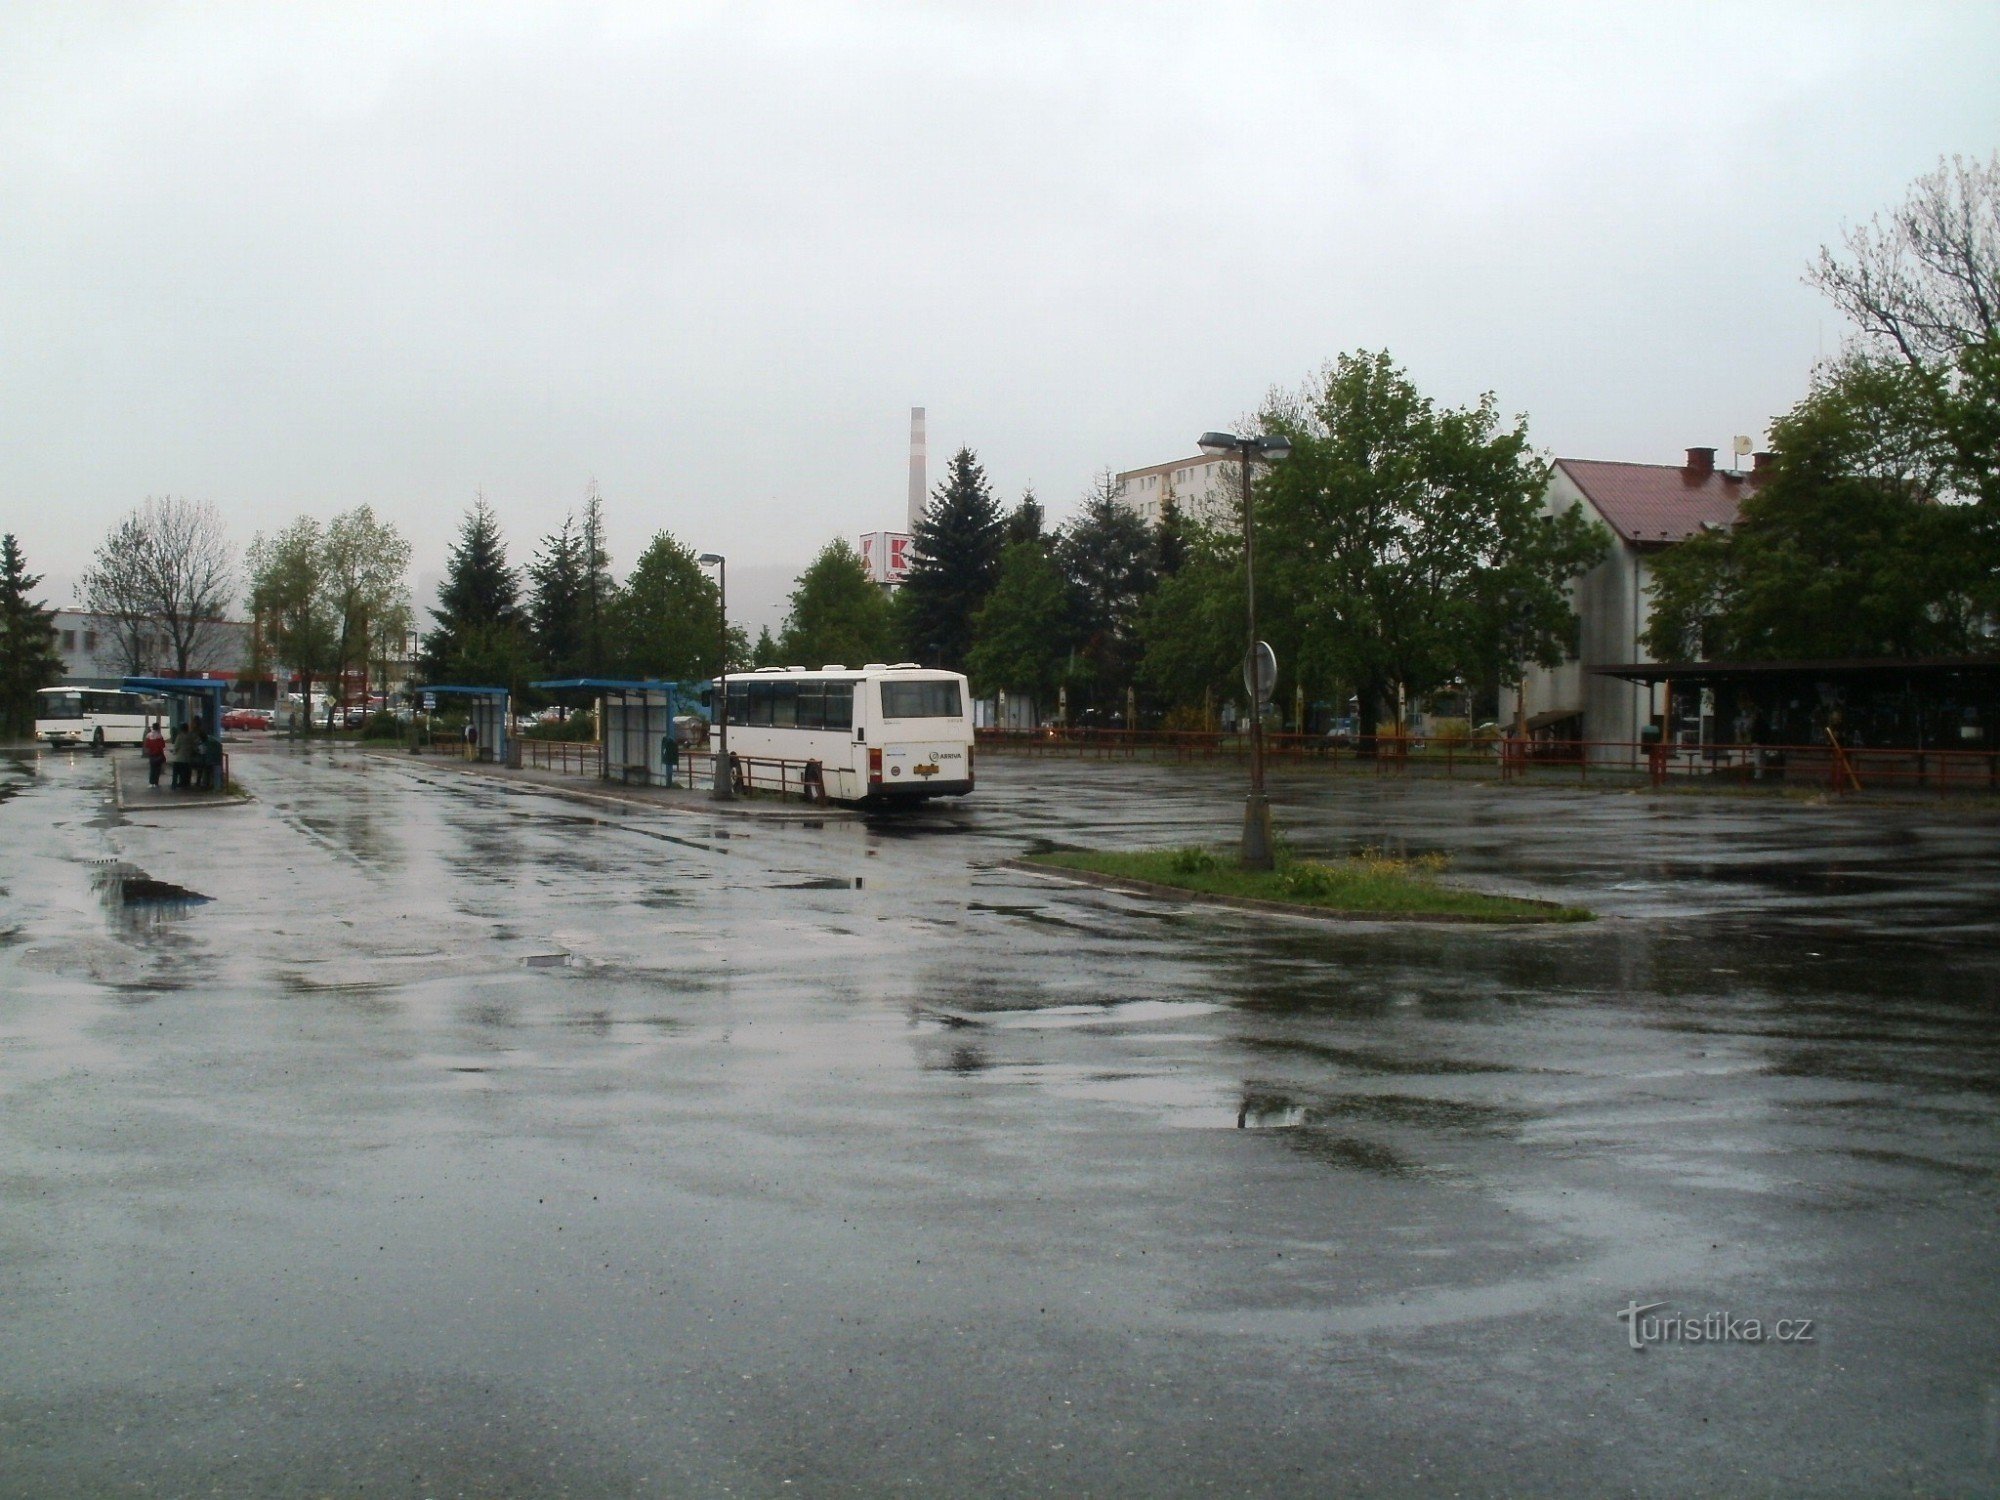 Dvur Králové nad Labem - stazione degli autobus